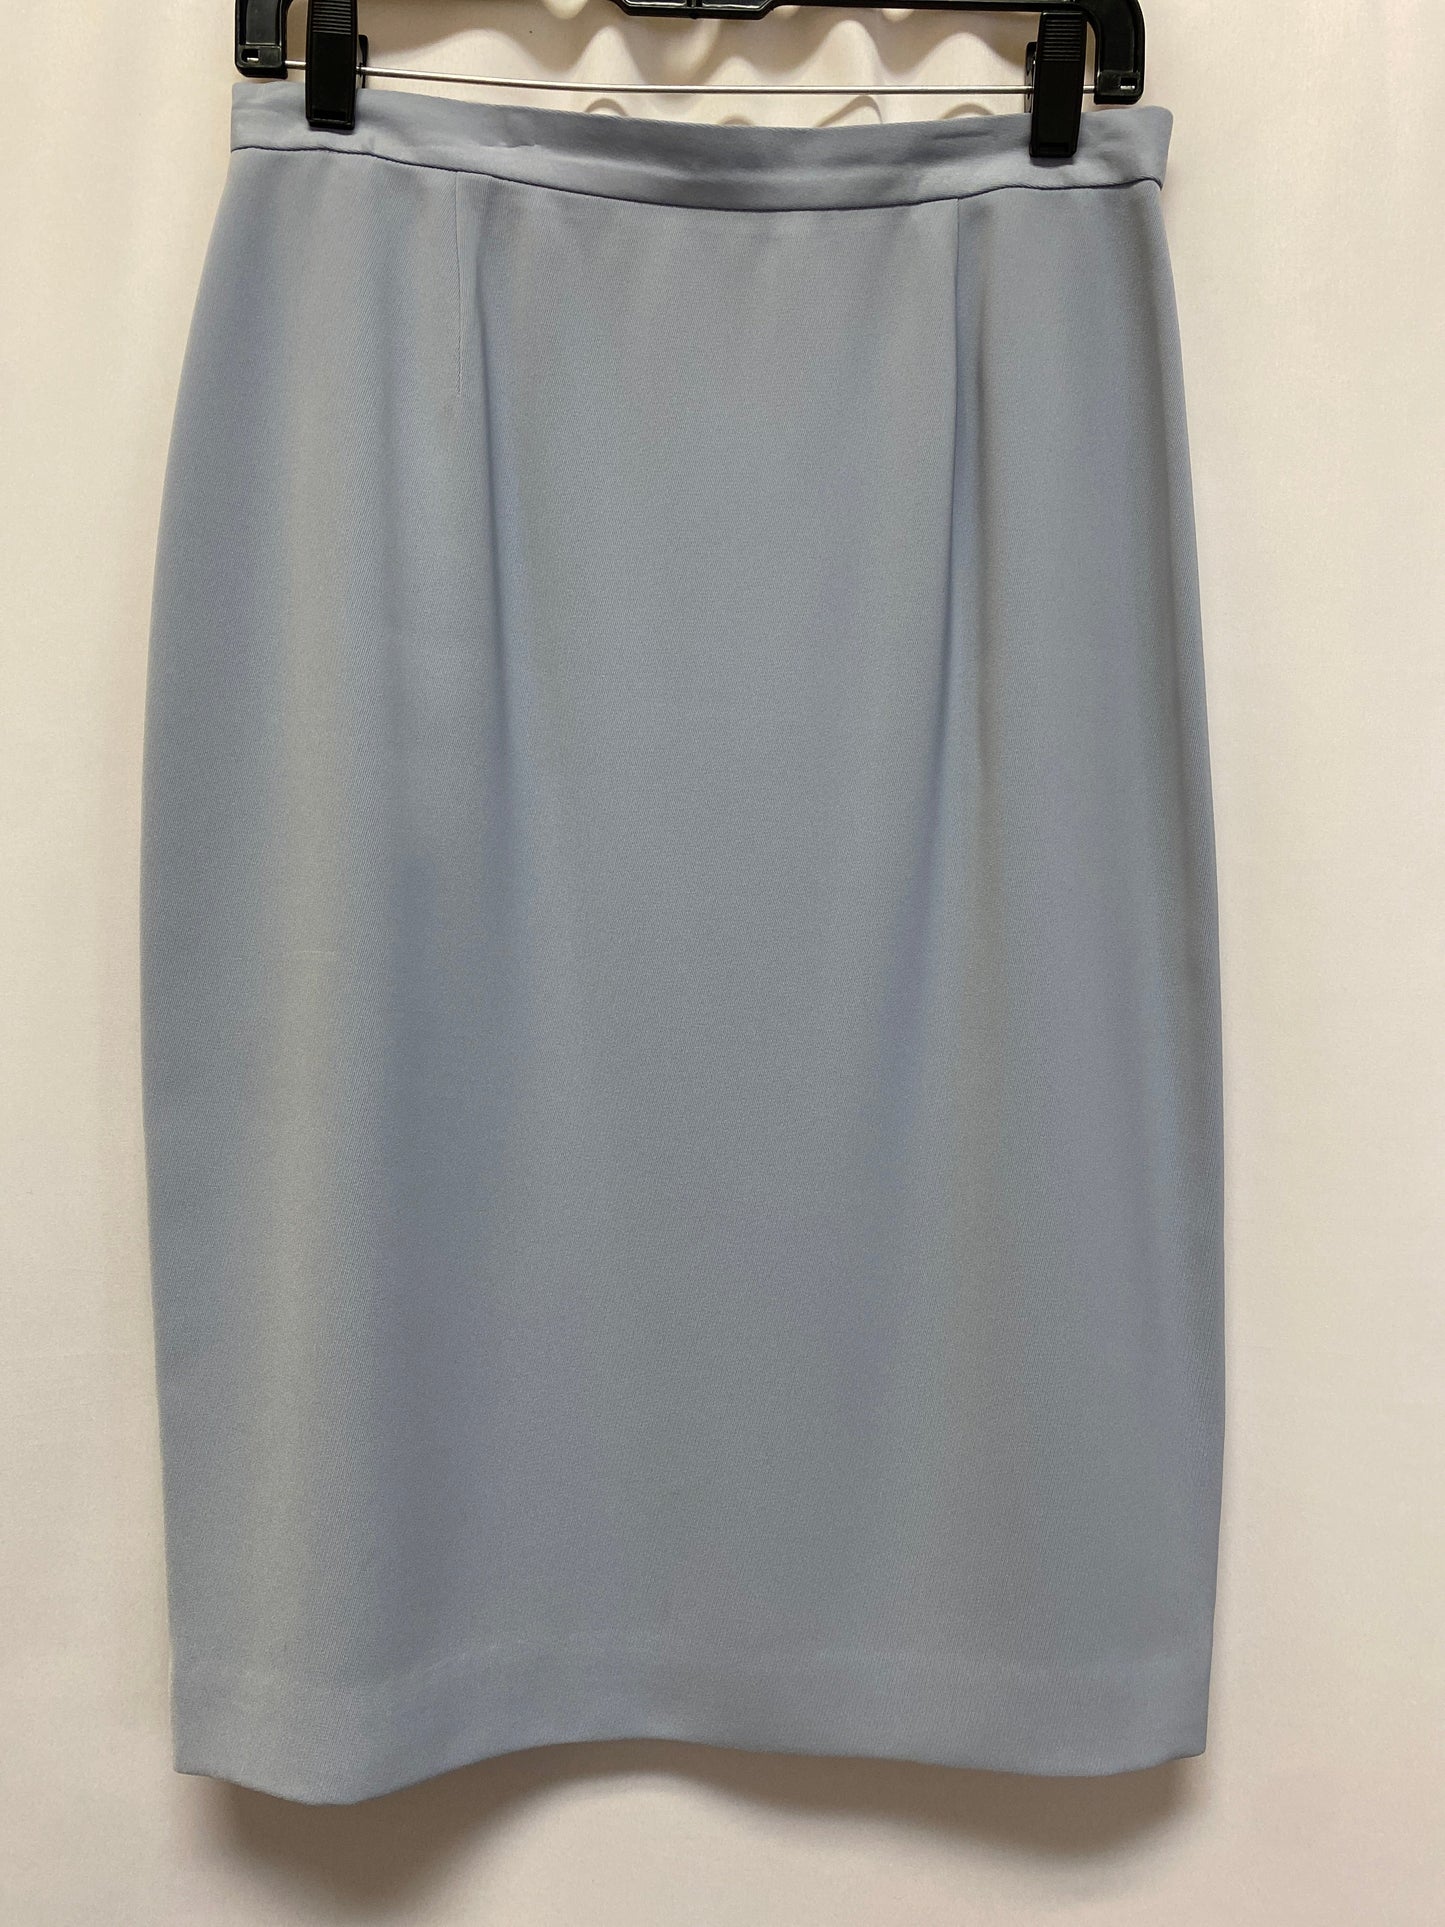 Skirt Suit 2pc By Jones New York  Size: 10